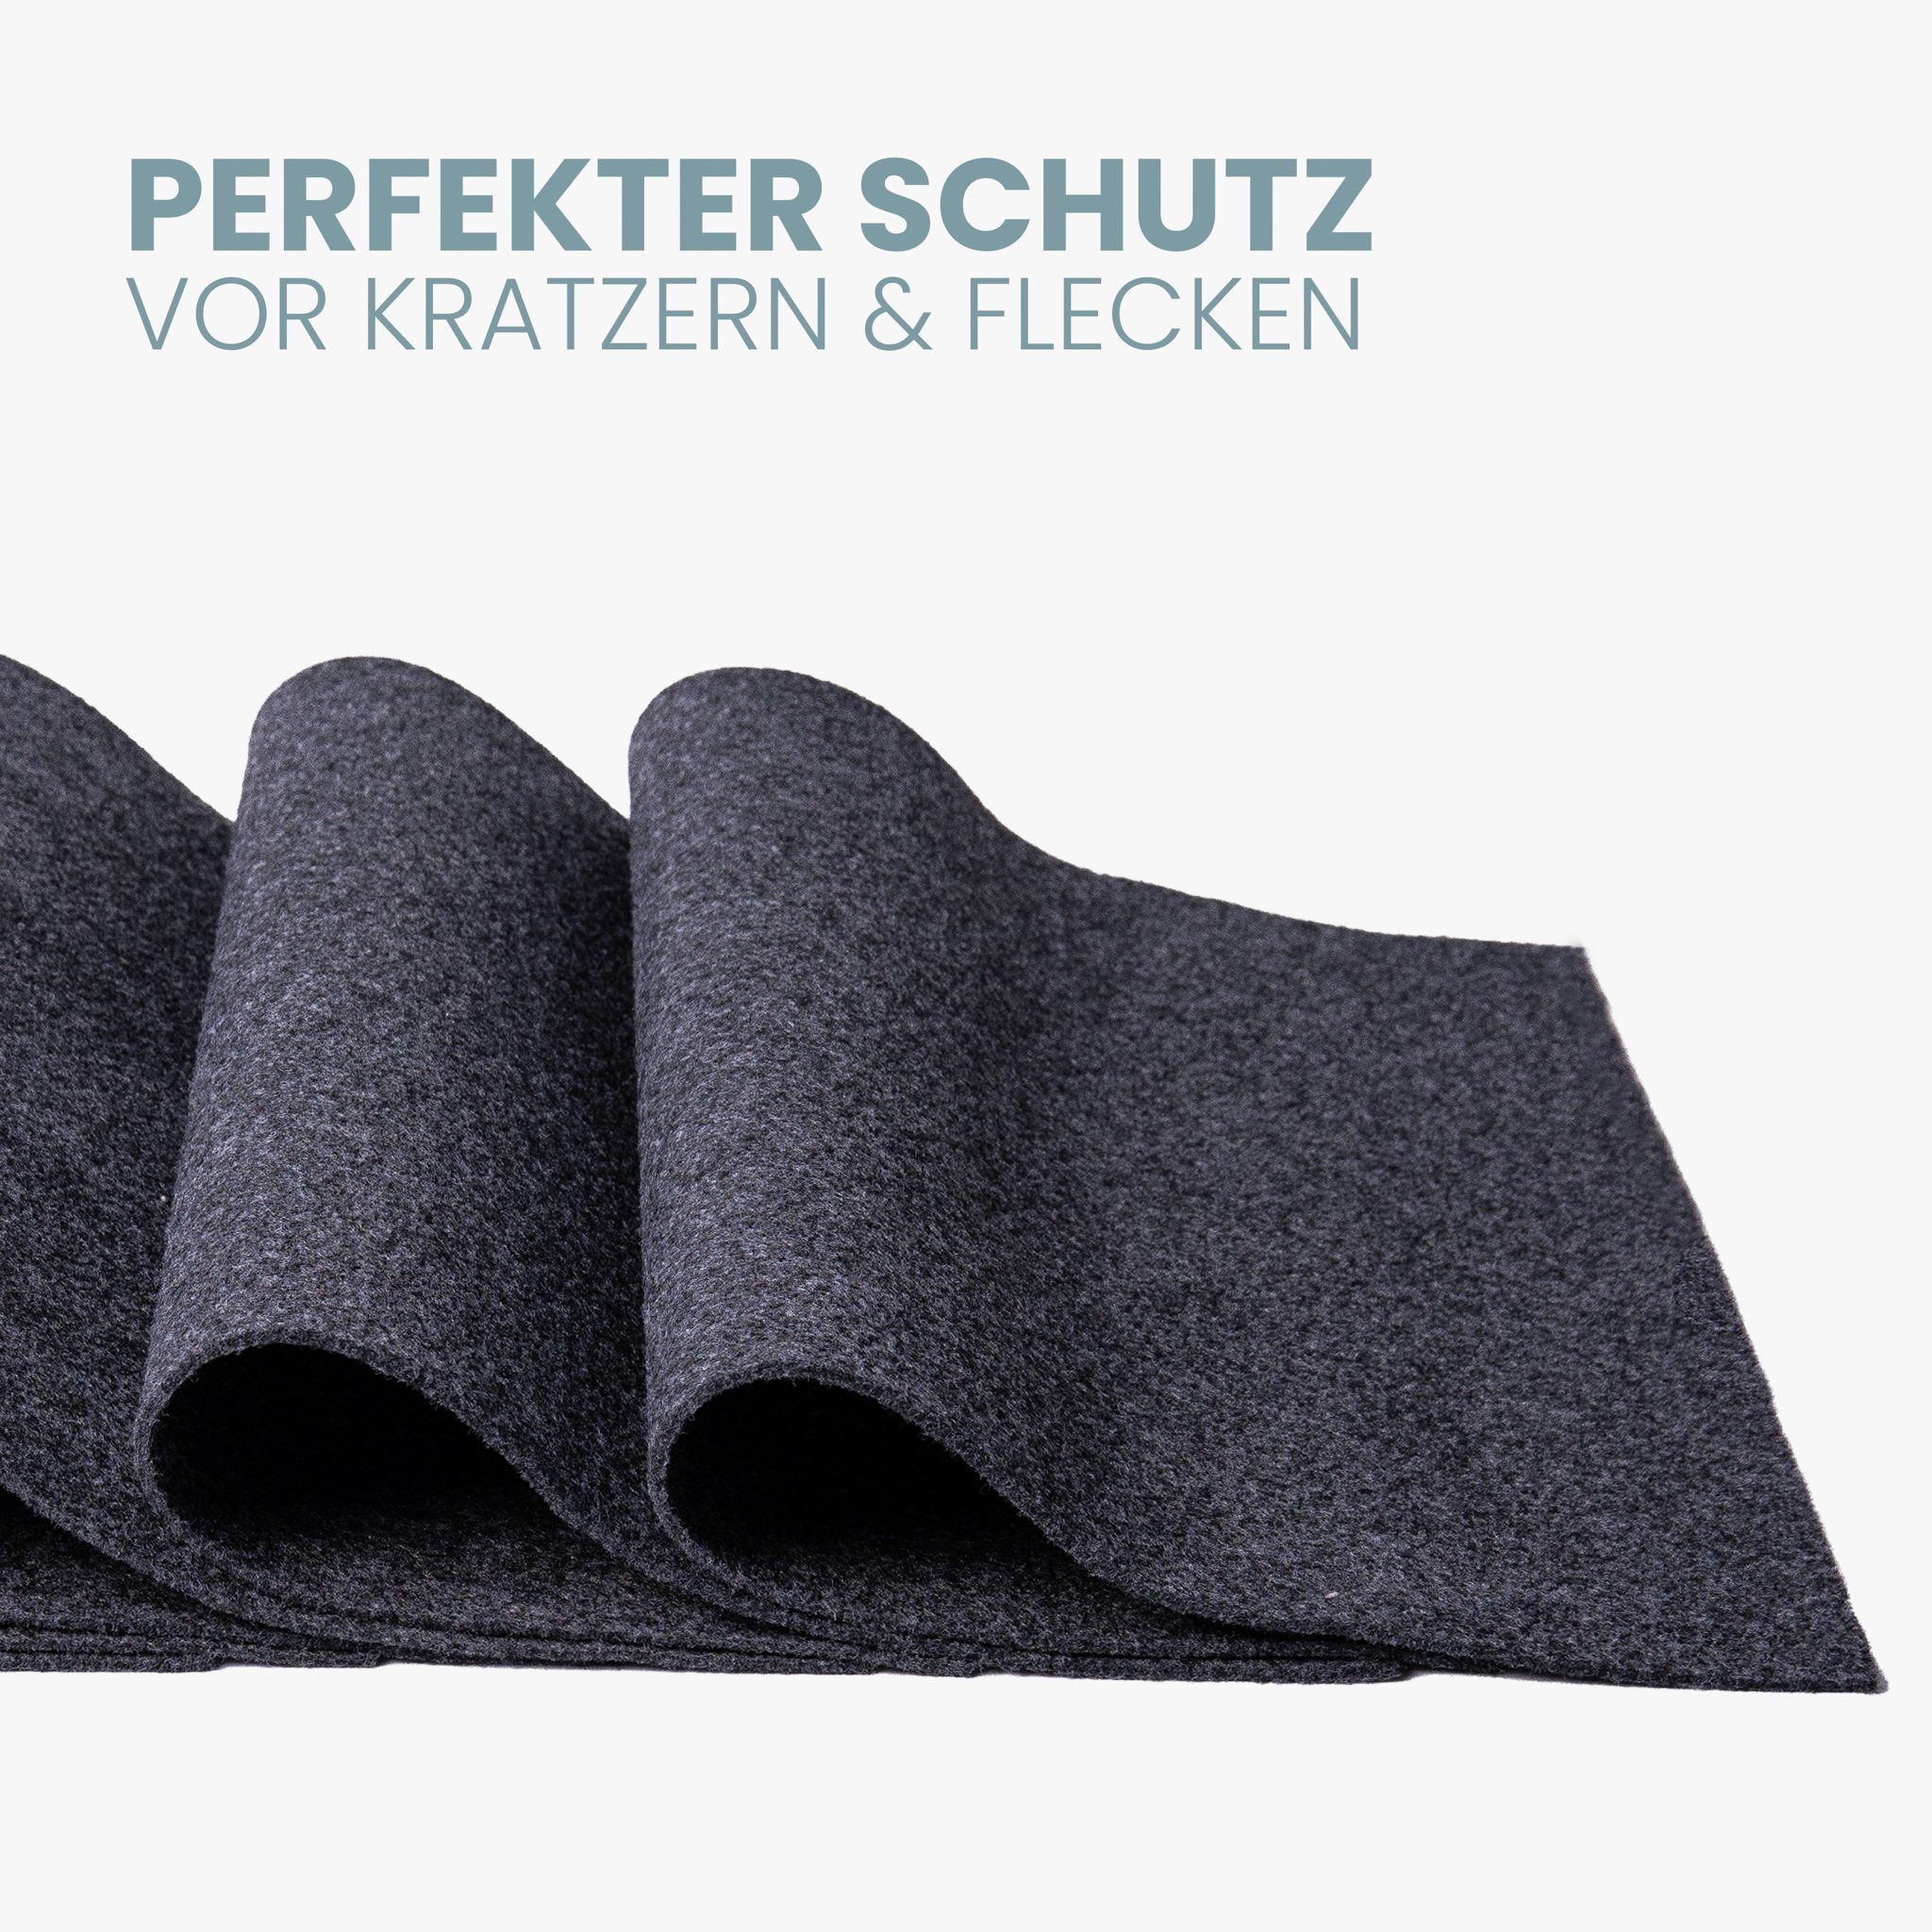 Made 30cm) - Filz Tischset Germany (40 and in Green x Platzset, - Recycling Filz Easy Platzsets,